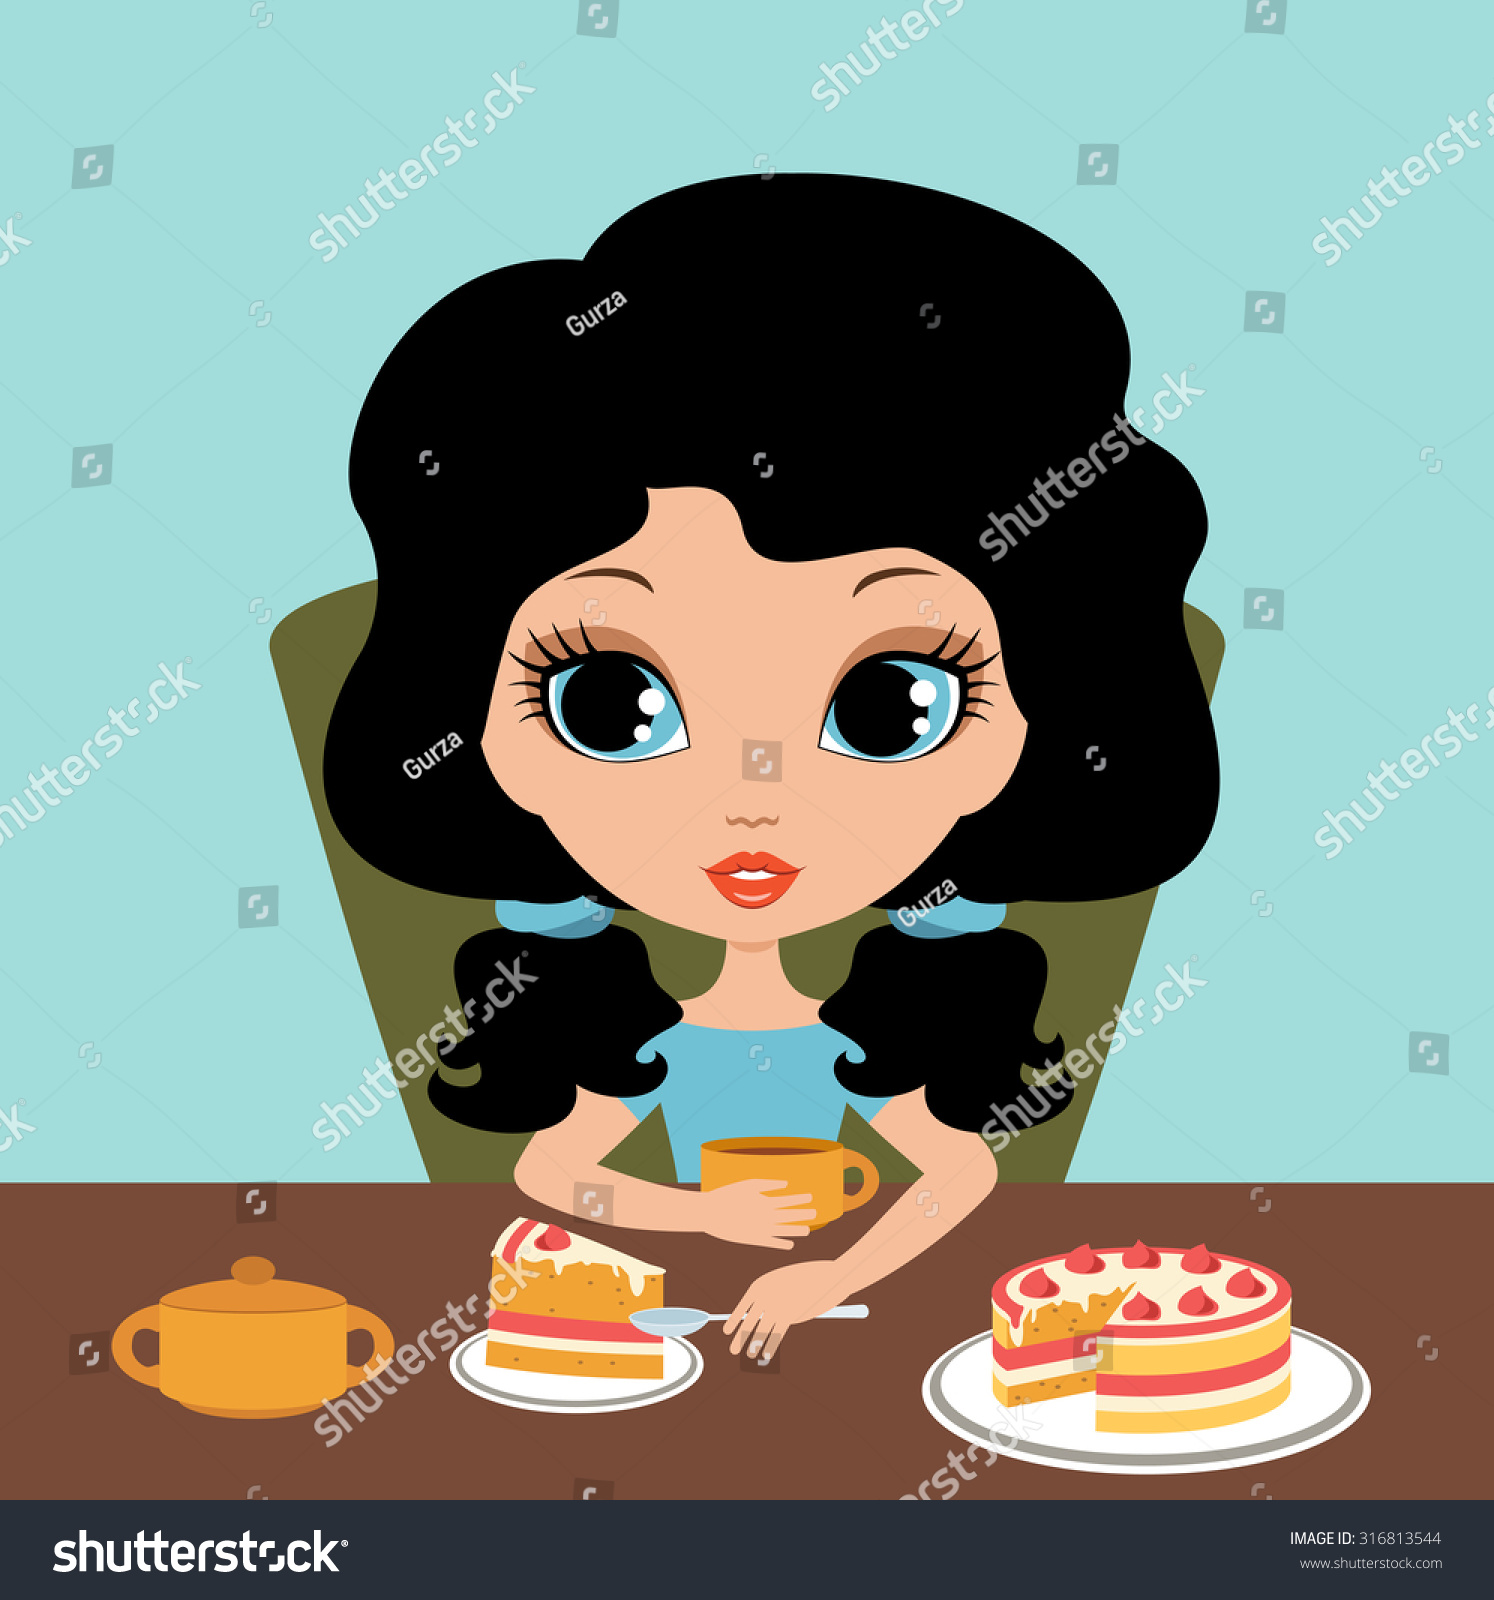 Little Girl Eats A Pie. Vector Illustration - 316813544 : Shutterstock